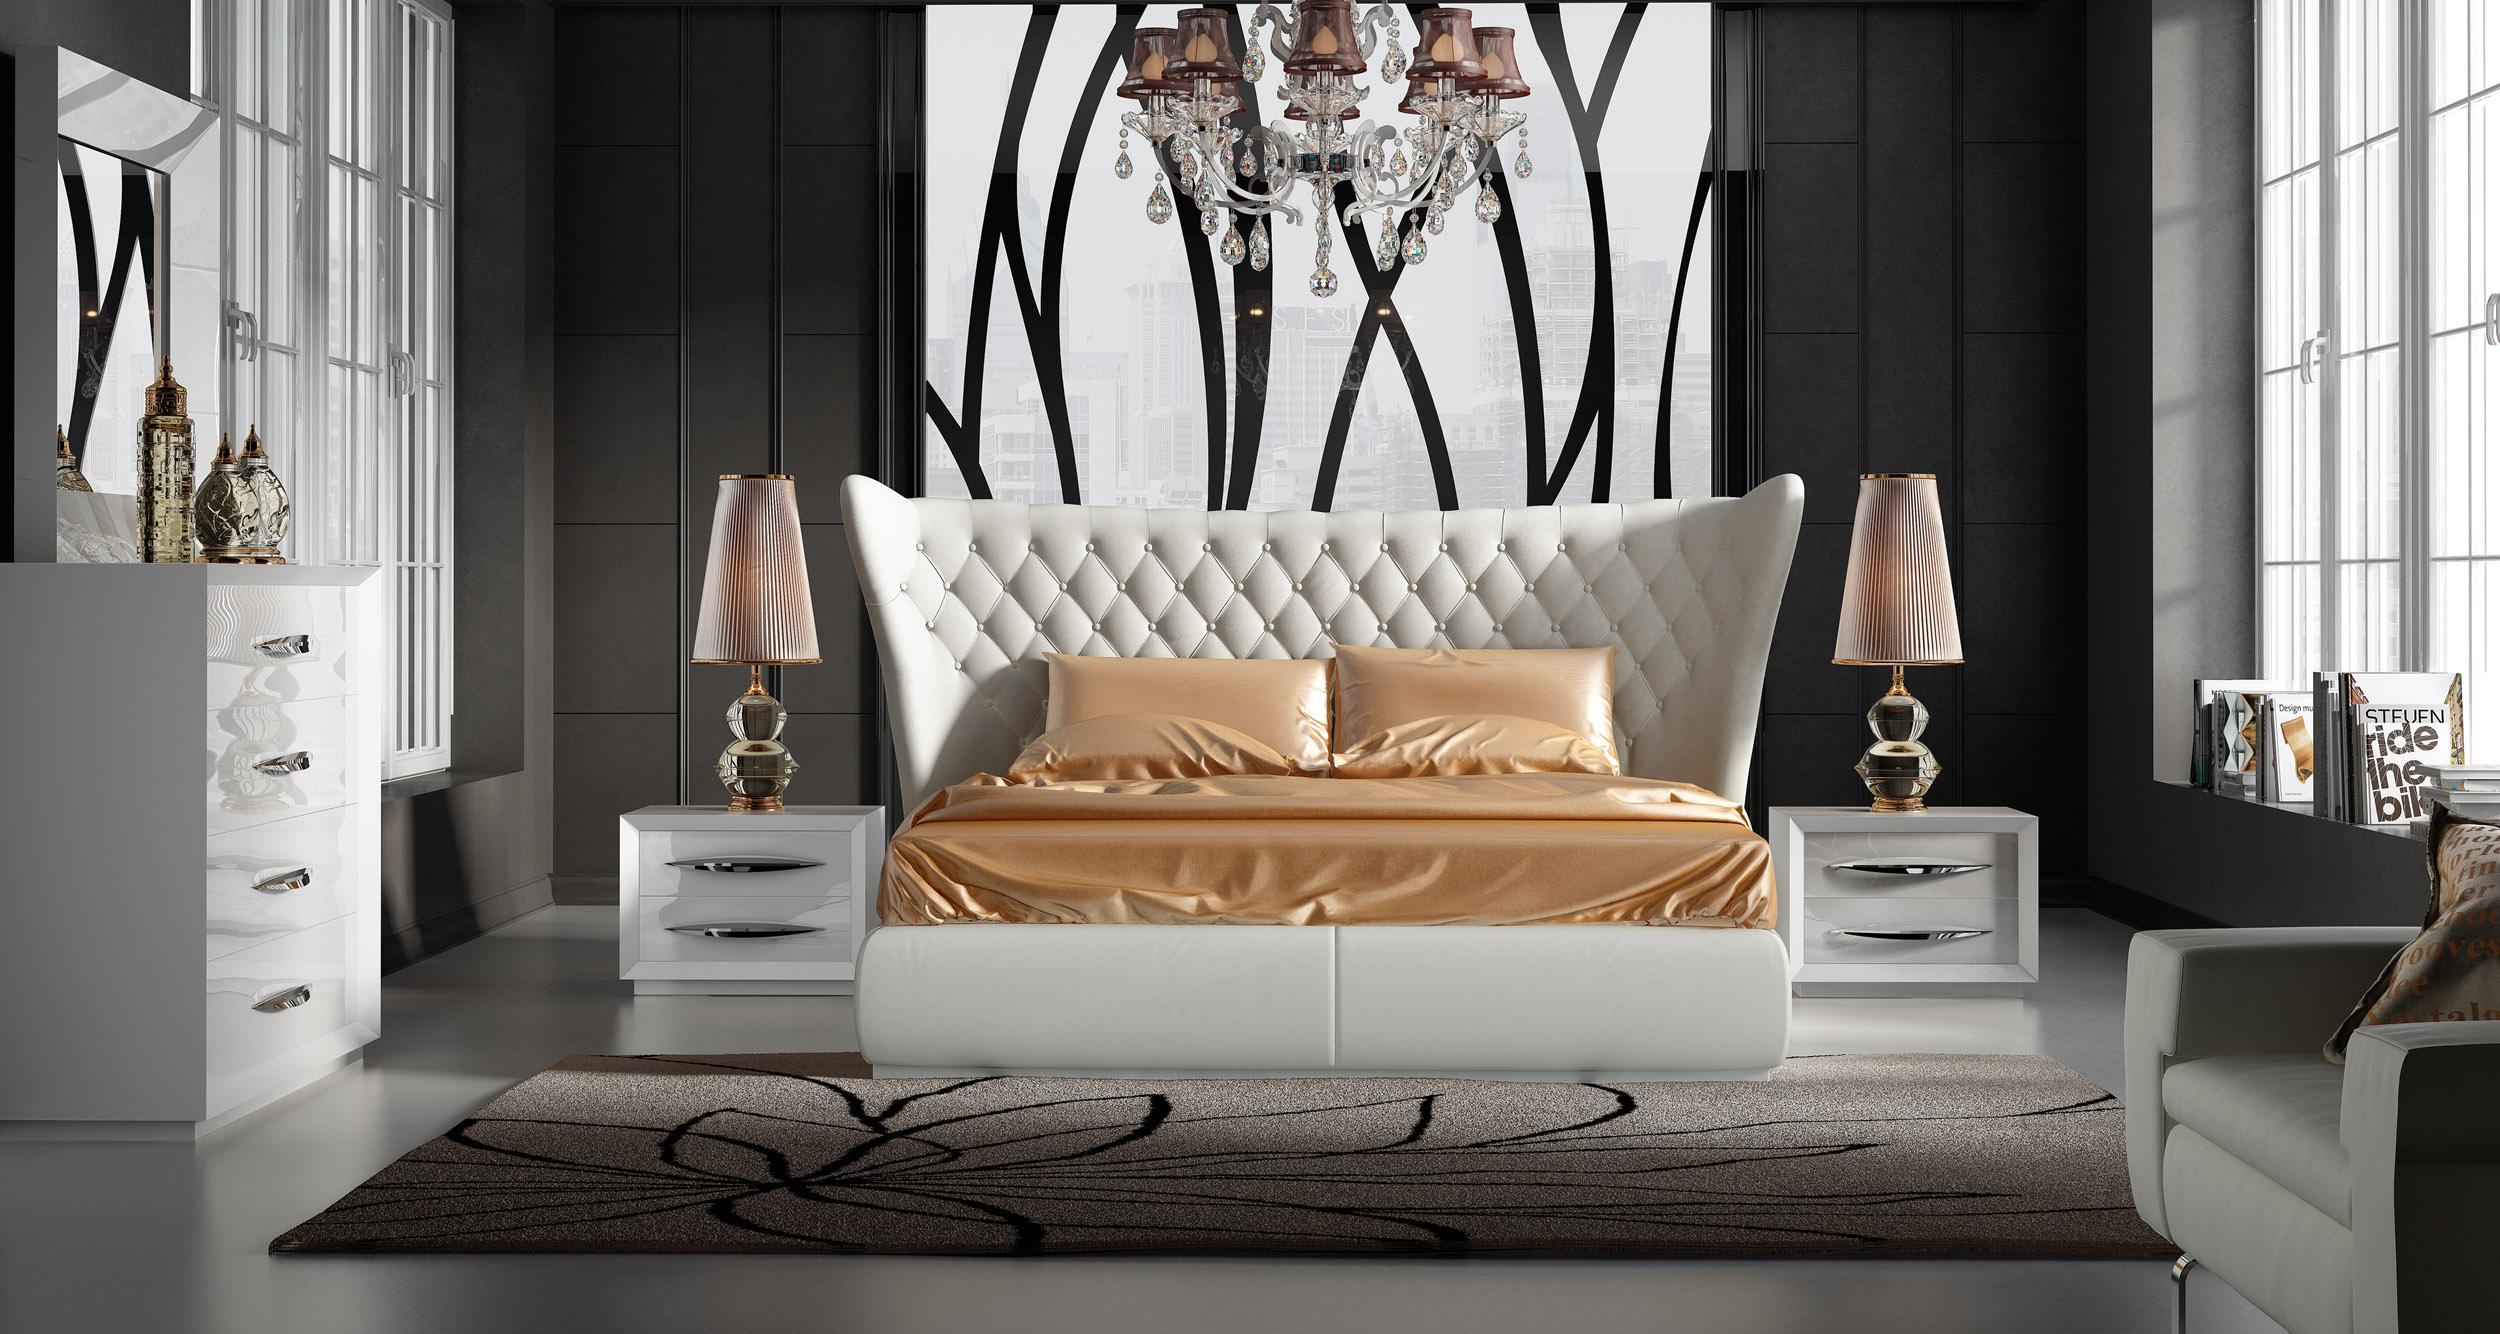 https://www.primeclassicdesign.com/images/modern-italian-bedroom-sets/leather-white-luxury-bedroom-furniture-europe-e-miami.jpg